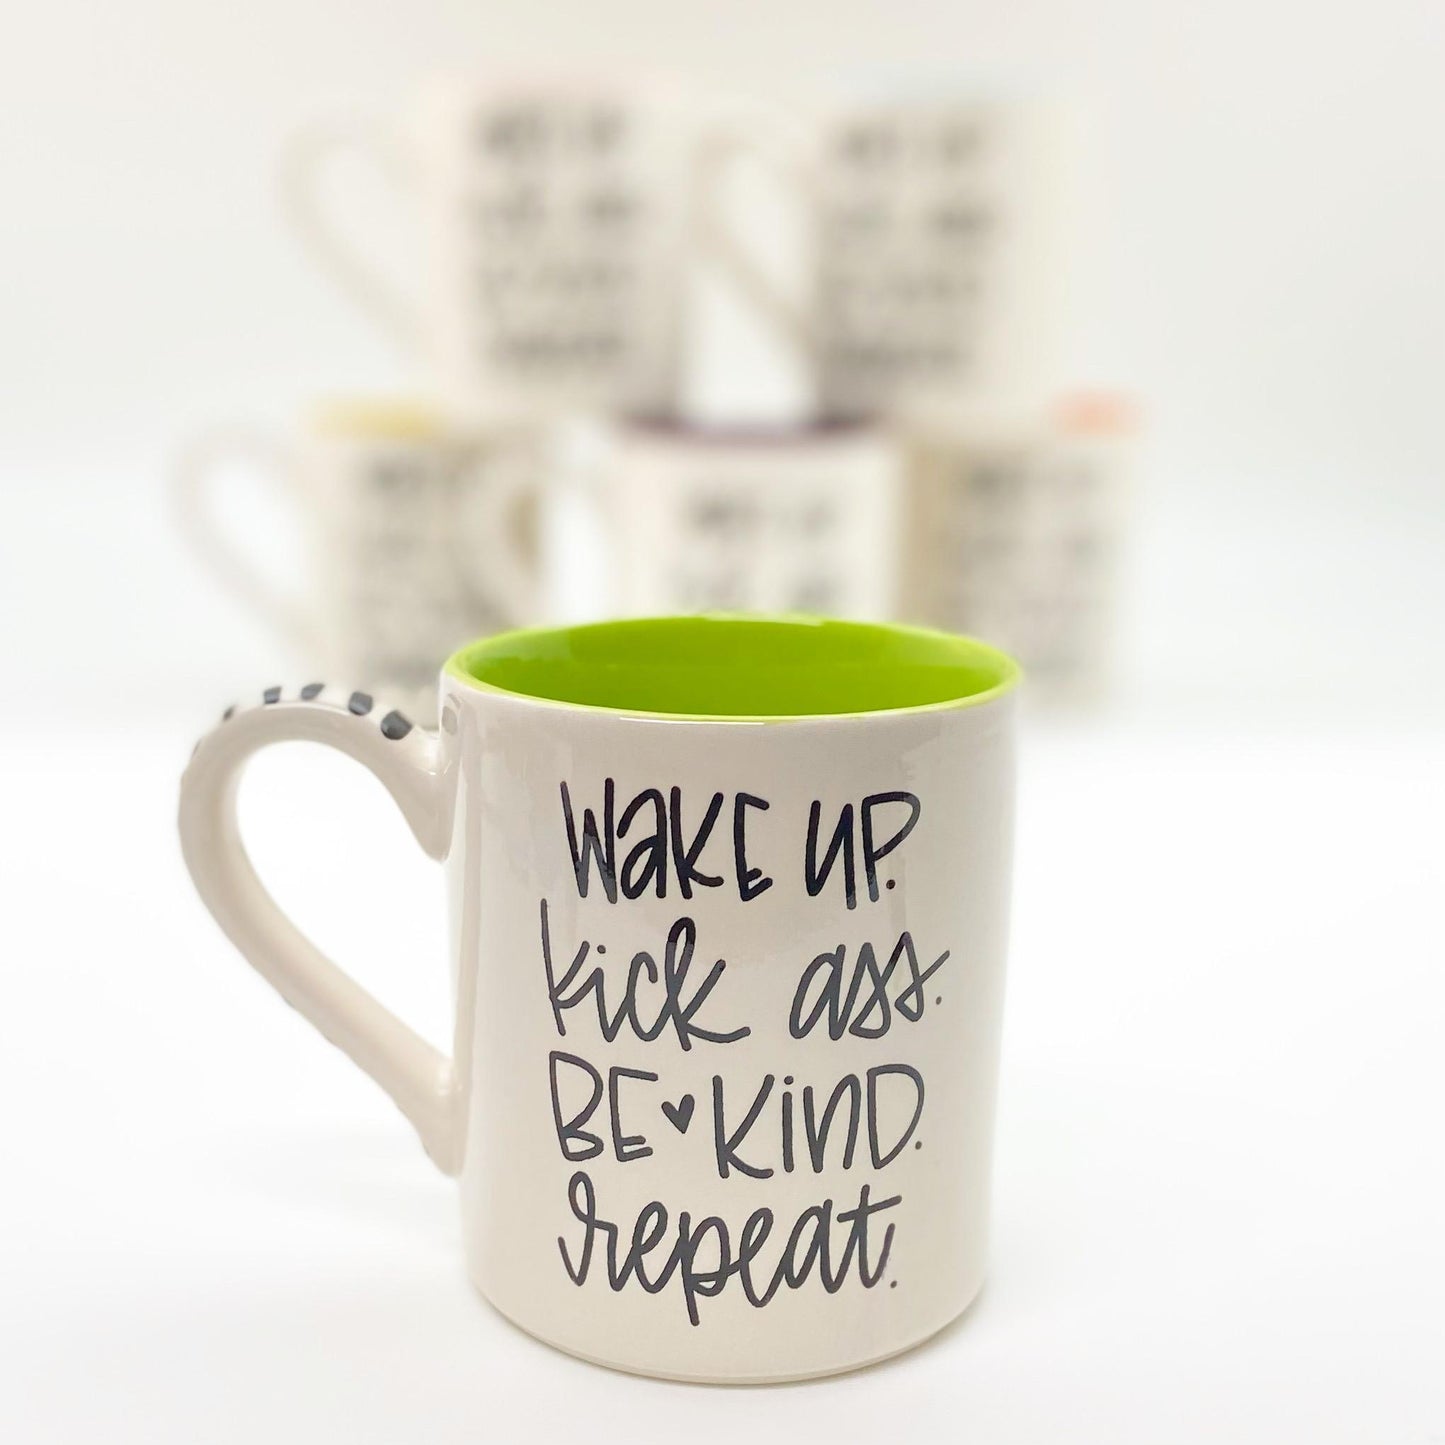 Mug - "Wake Up, Kick Ass, Be Kind, Repeat" - Ceramic